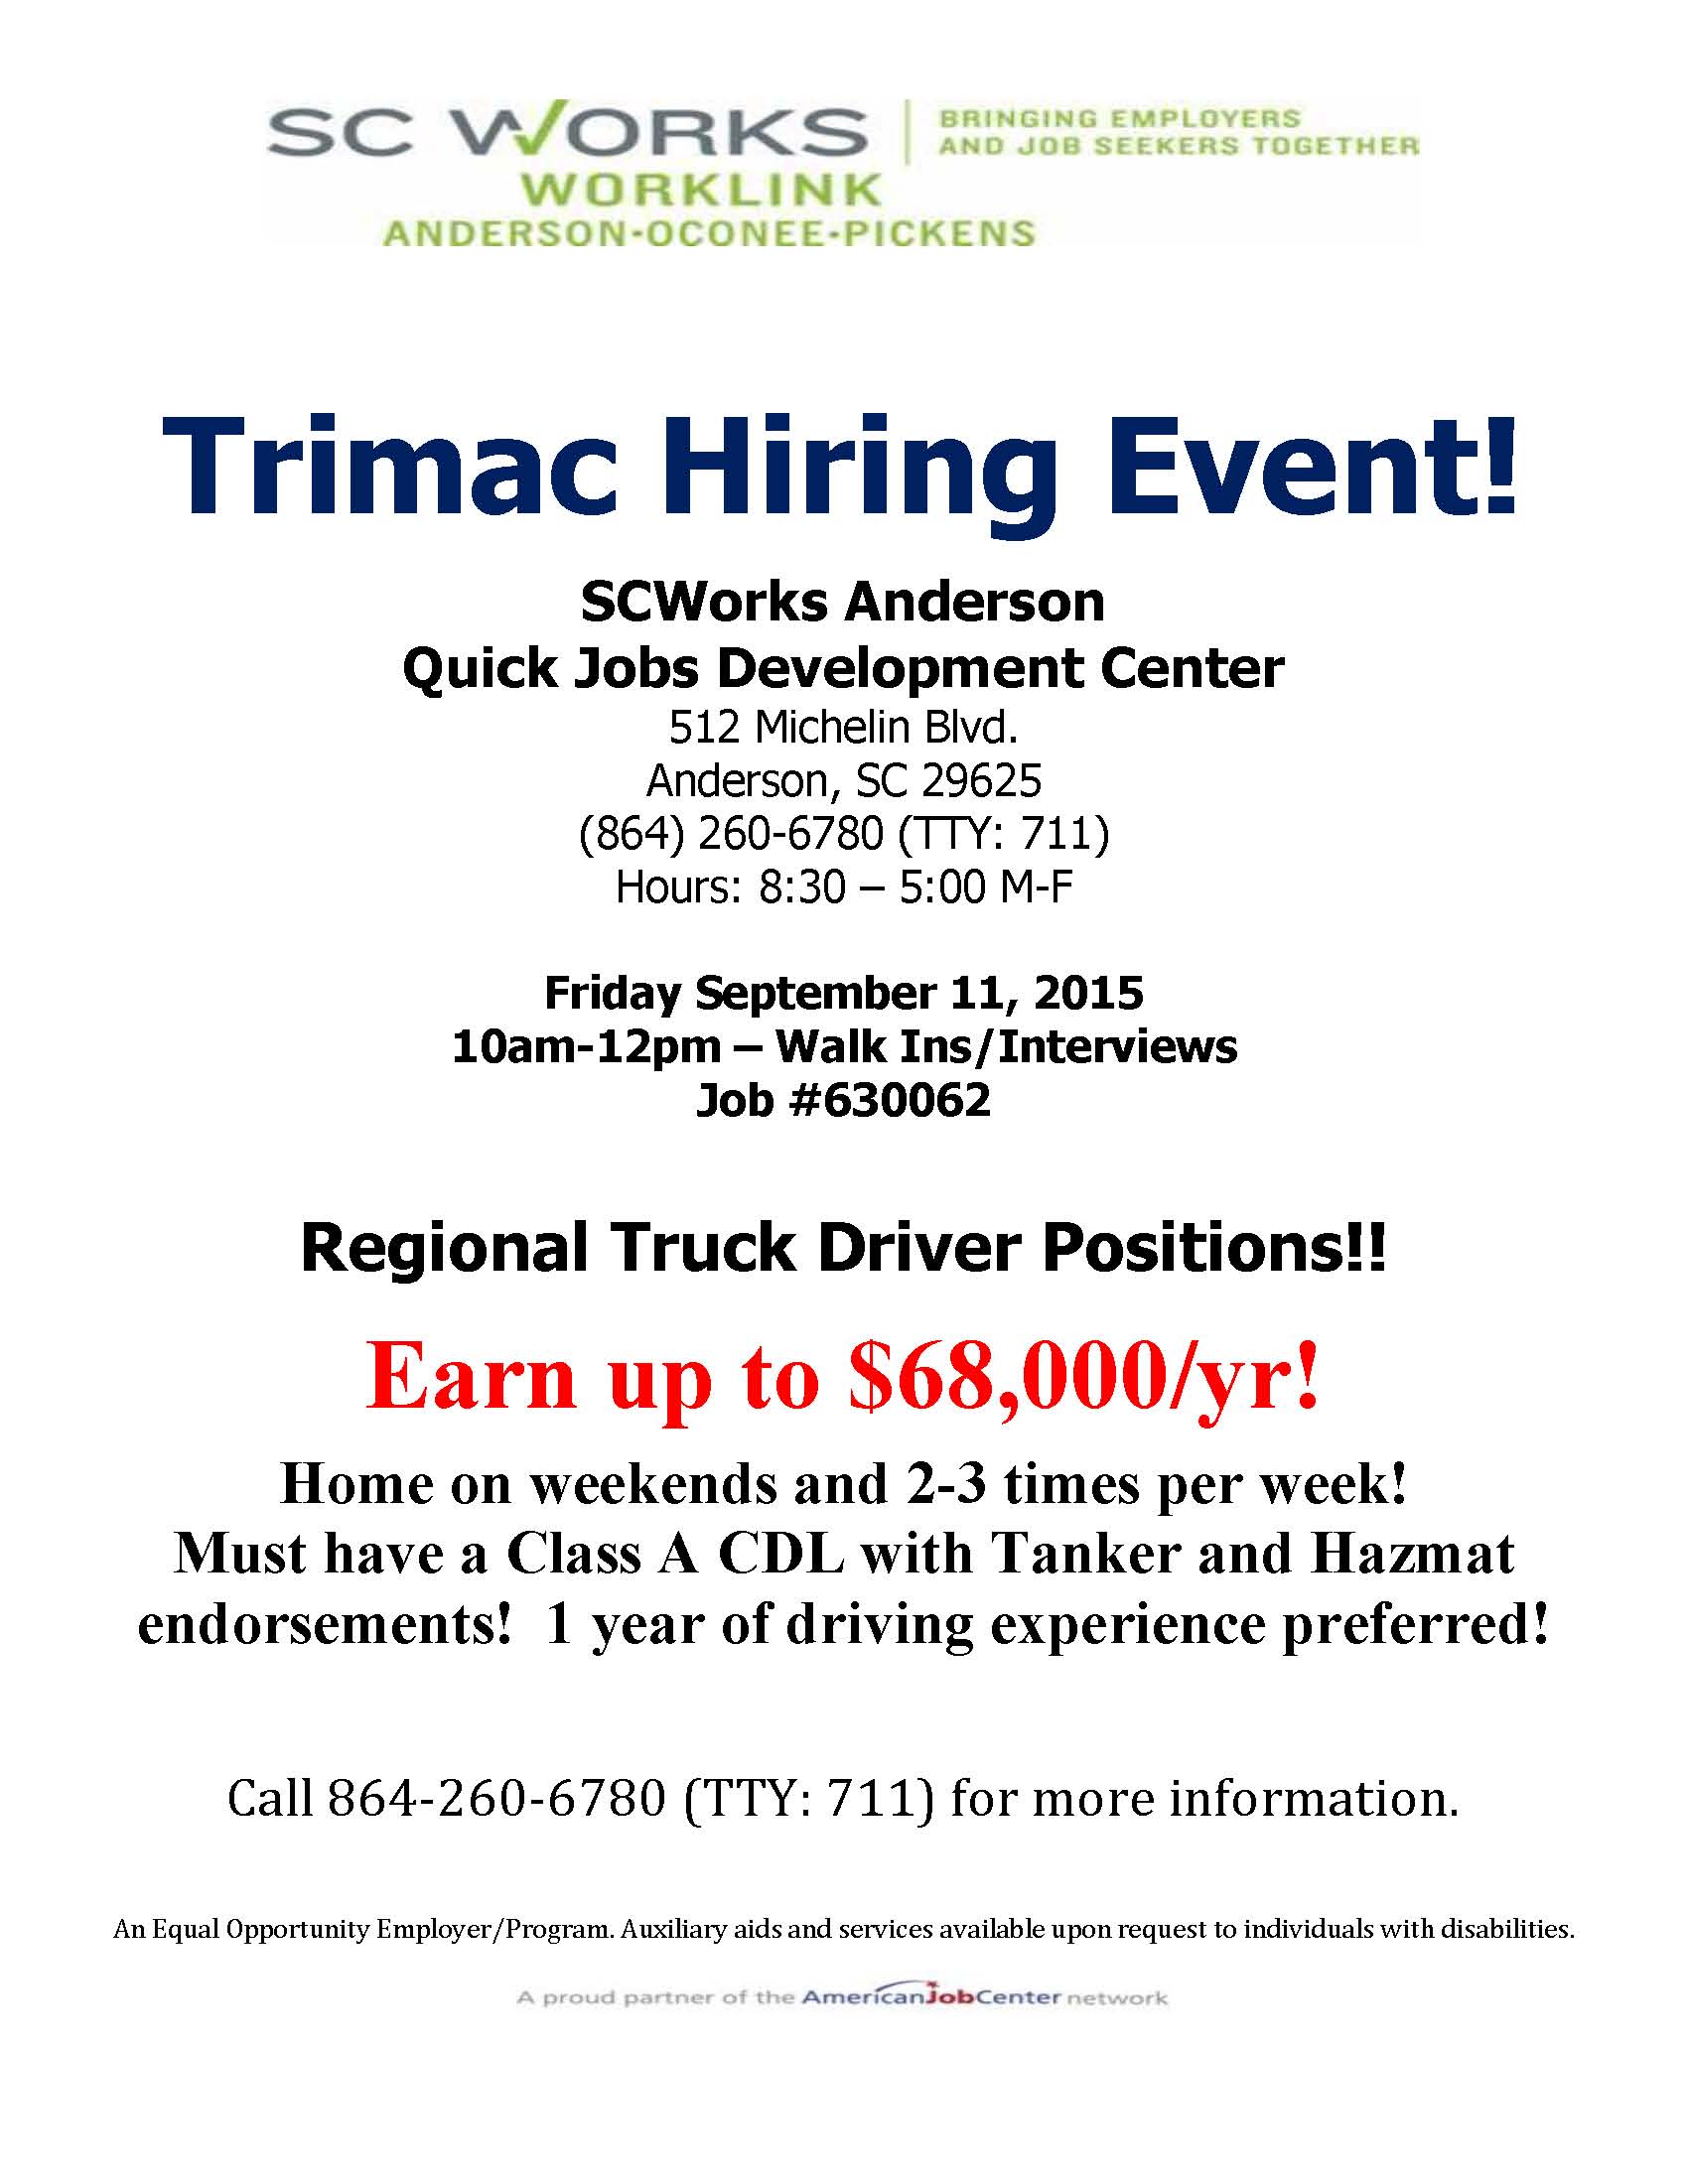 Trimac-Hiring-Event-Flyer-9-11